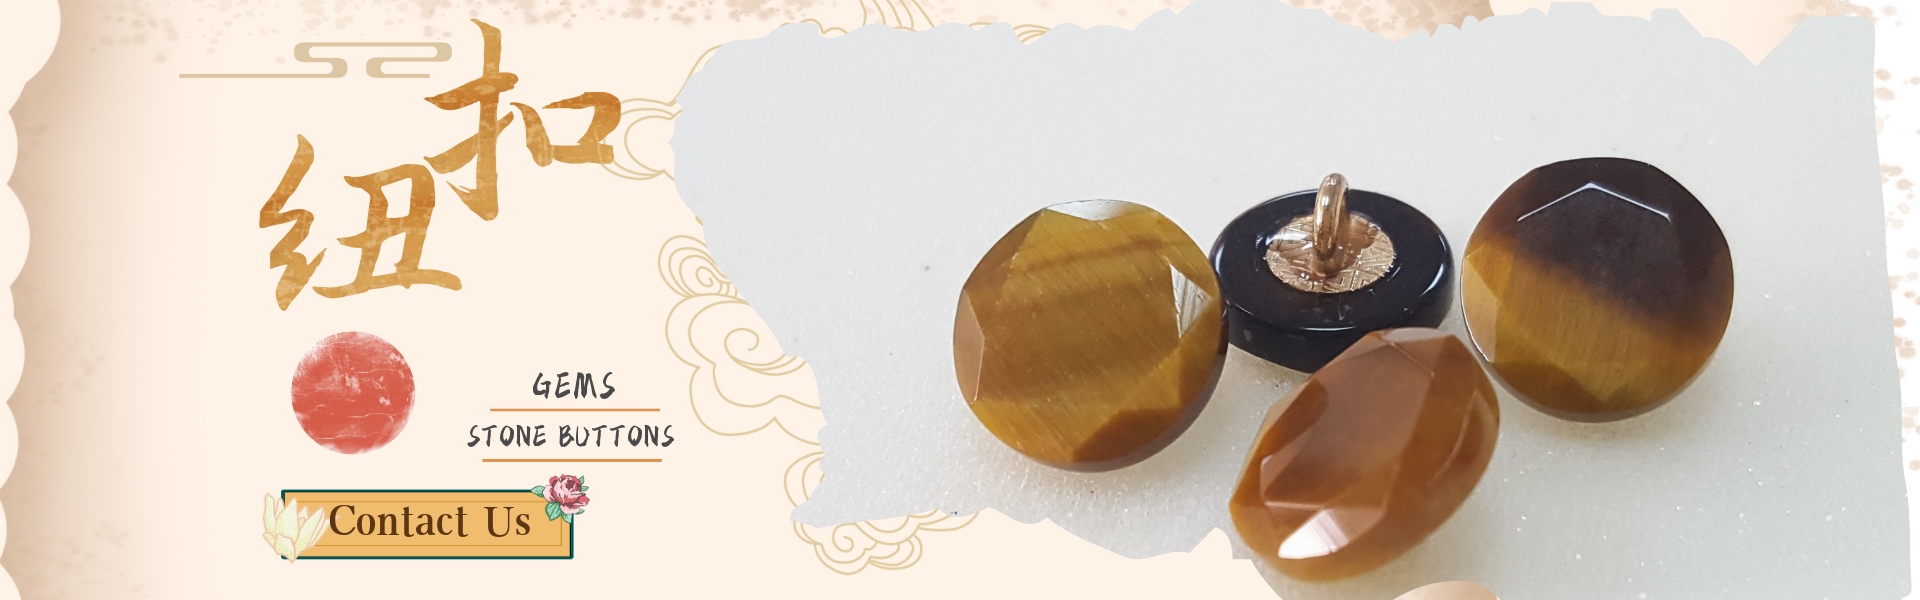 edelstenen, stenen knopen, jade,Dongguan ZIZO Arts and Crafts Co. LTD